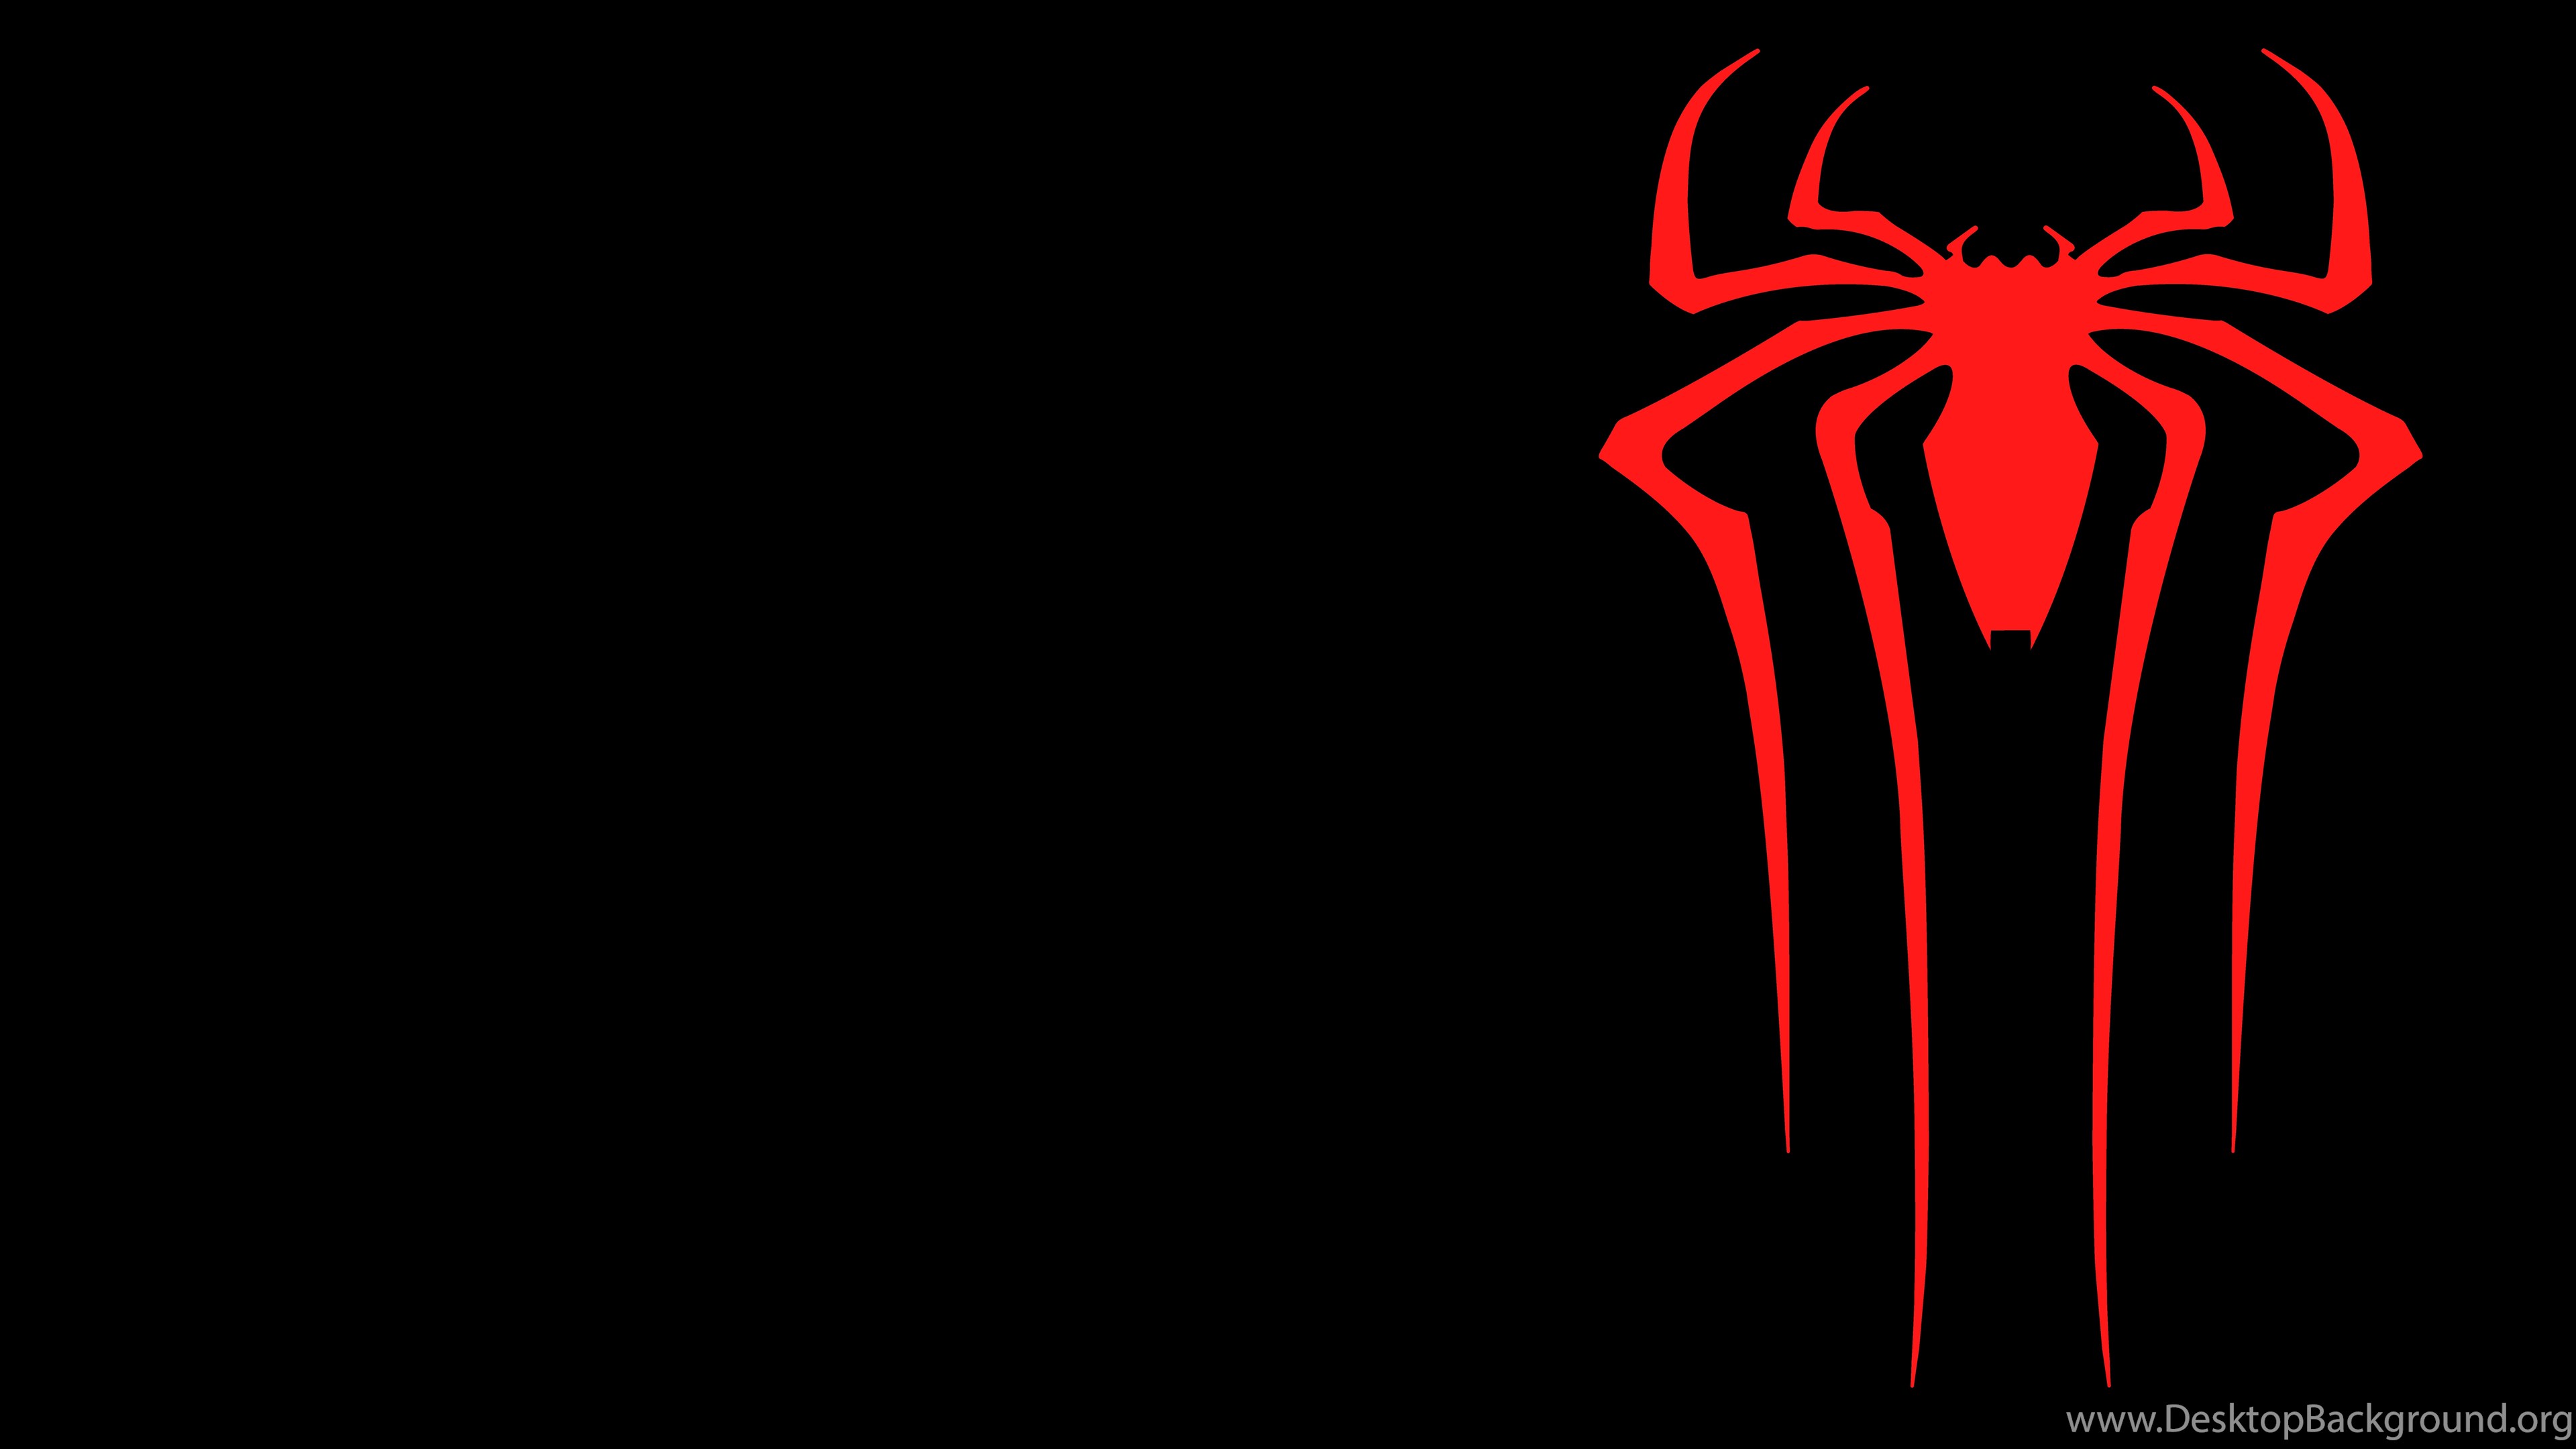 Other Wallpaper  Spiderman Logo Wallpaper  Backgrounds  HD  